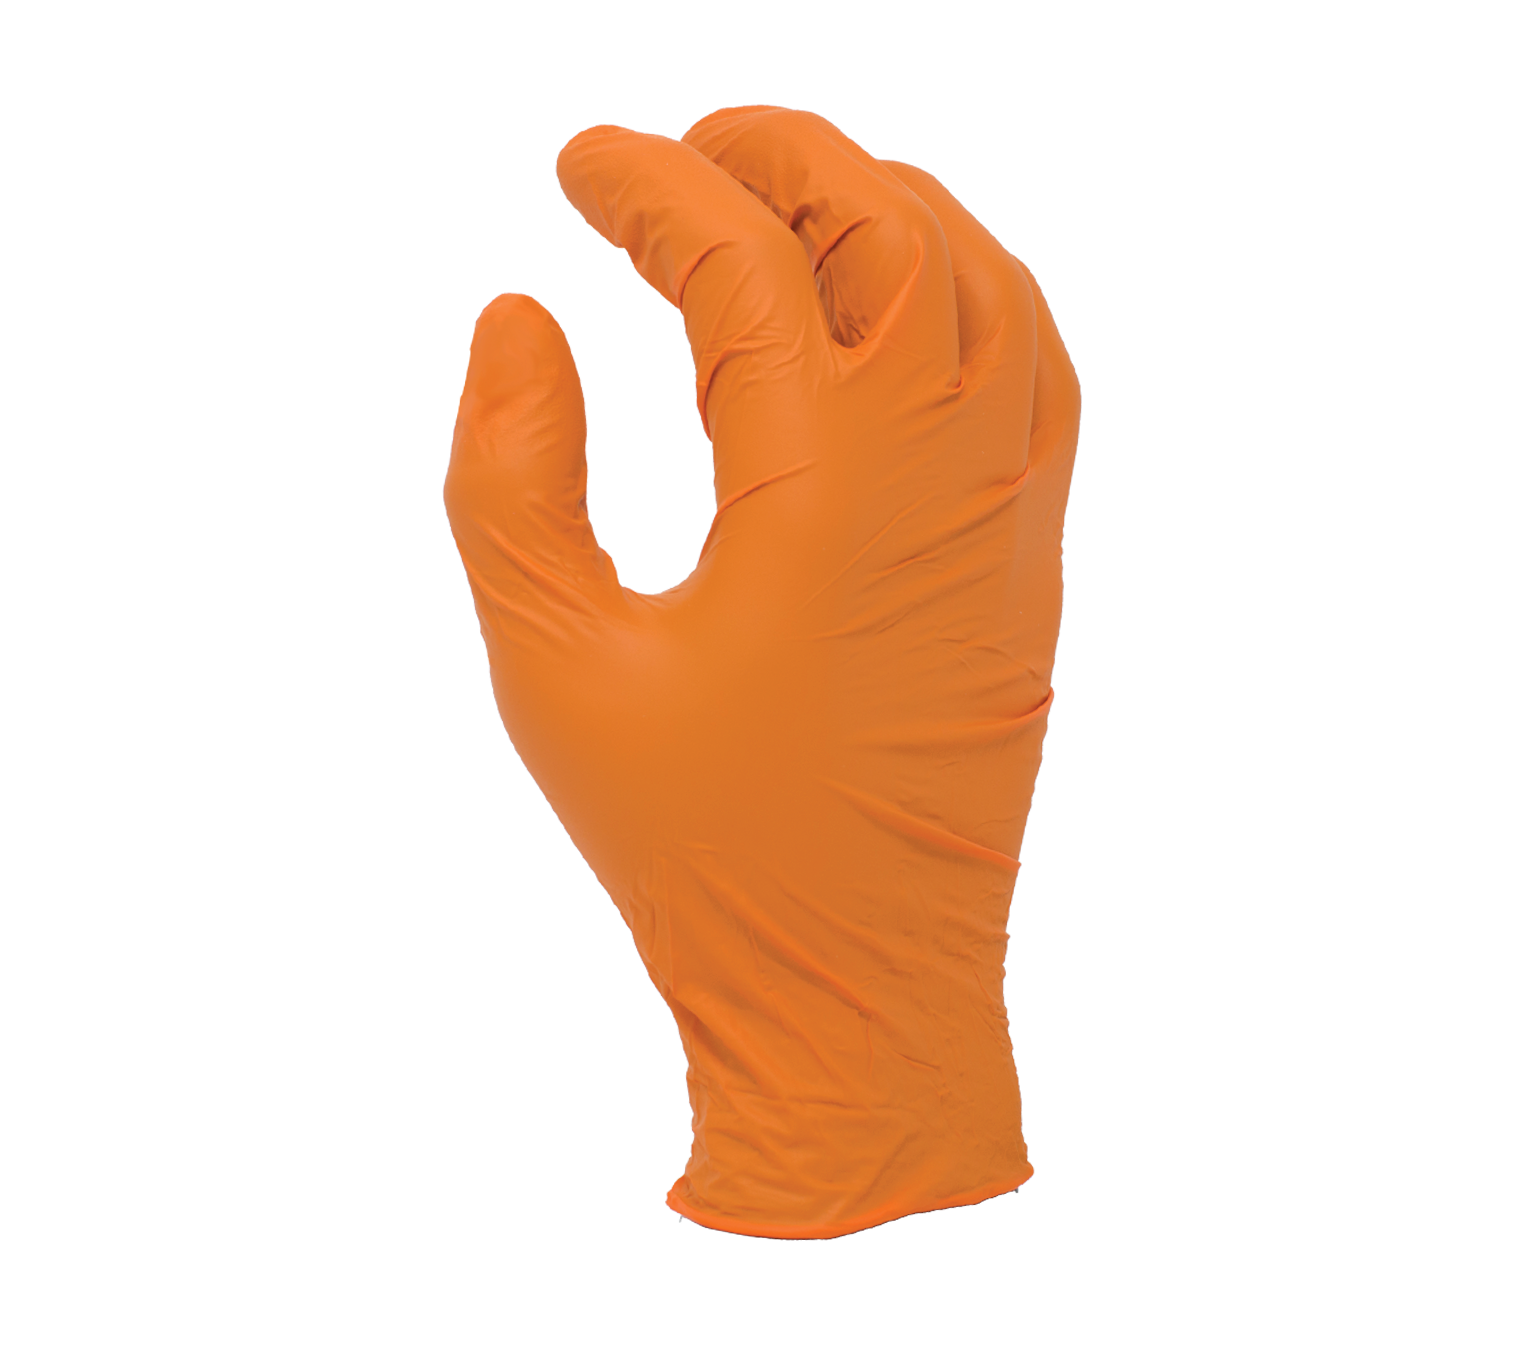 3.5 mil Orange Nitrile Disposable Gloves, 9 1/2" length, Powder-free, textured finish, industrial grade